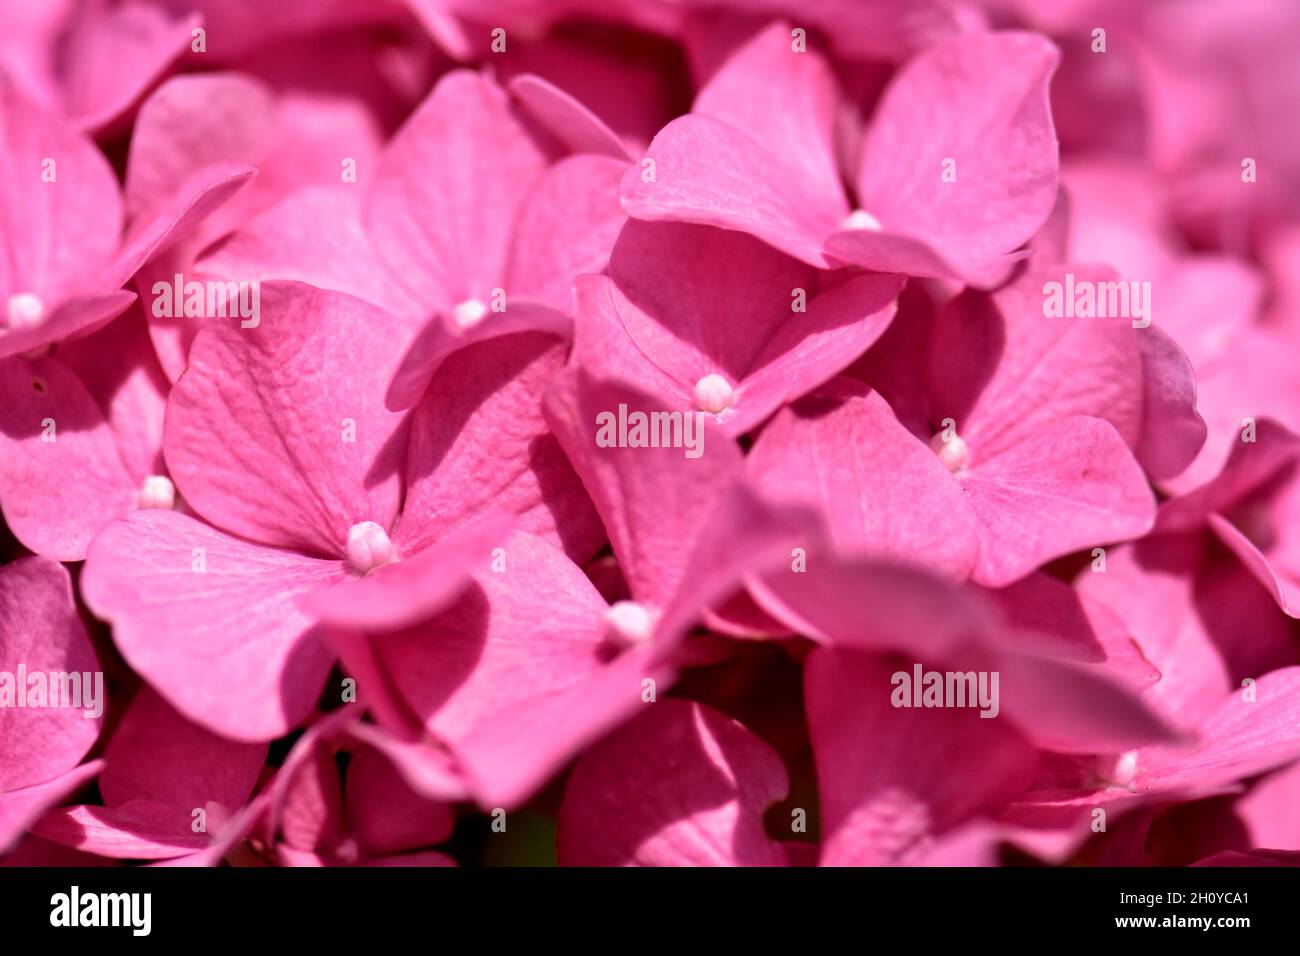 Full Frame image of Hydrangea flower head in pink Stock Photo